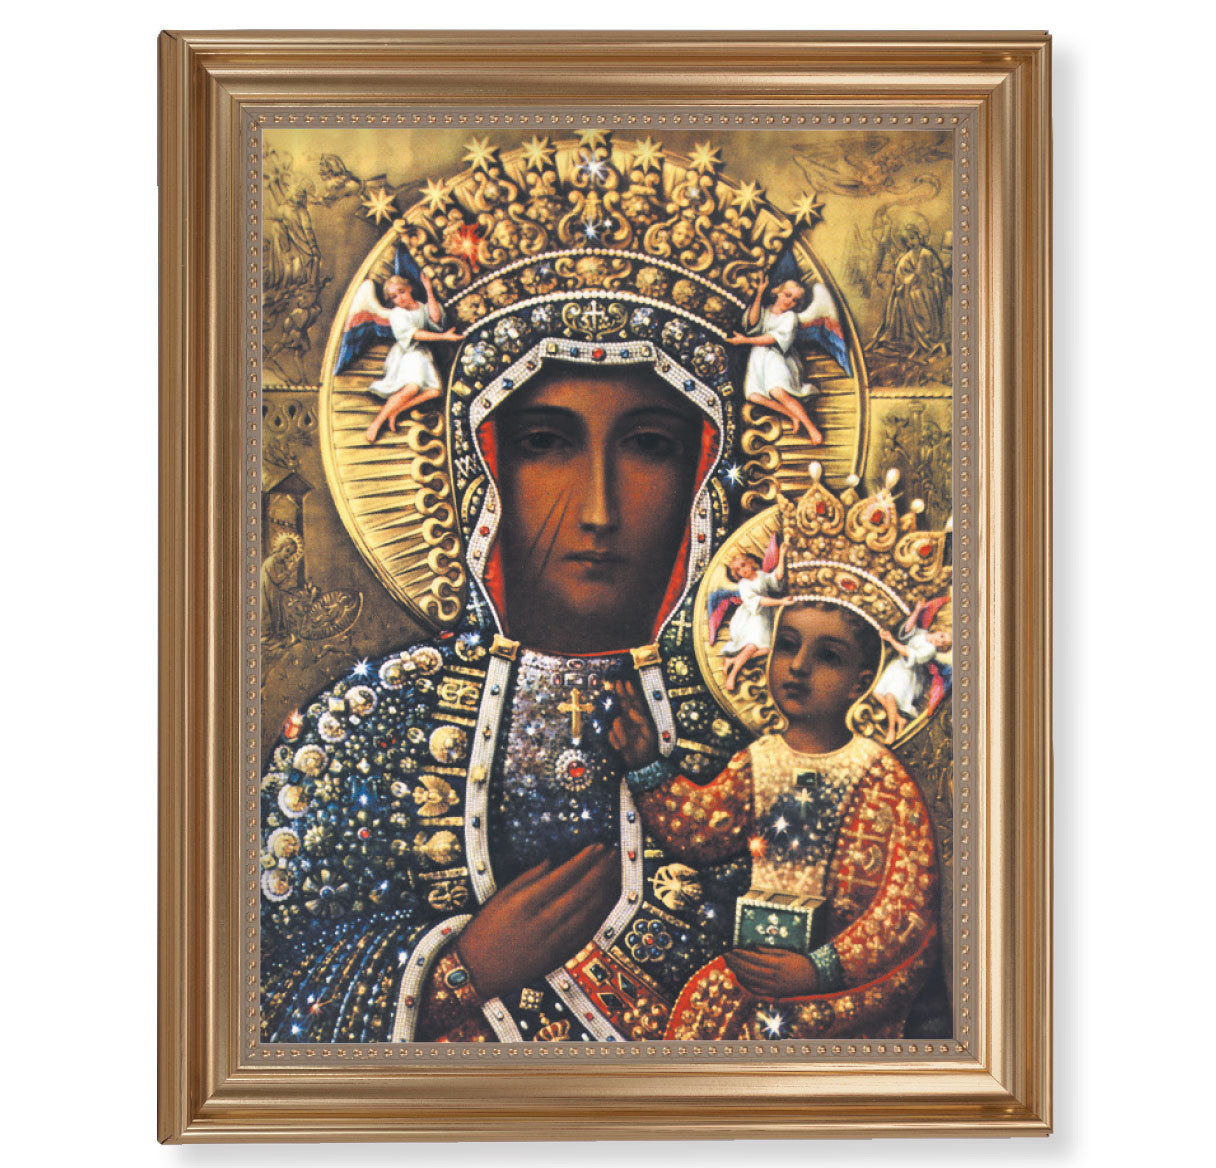 Our Lady of Czestochowa Gold Framed Art